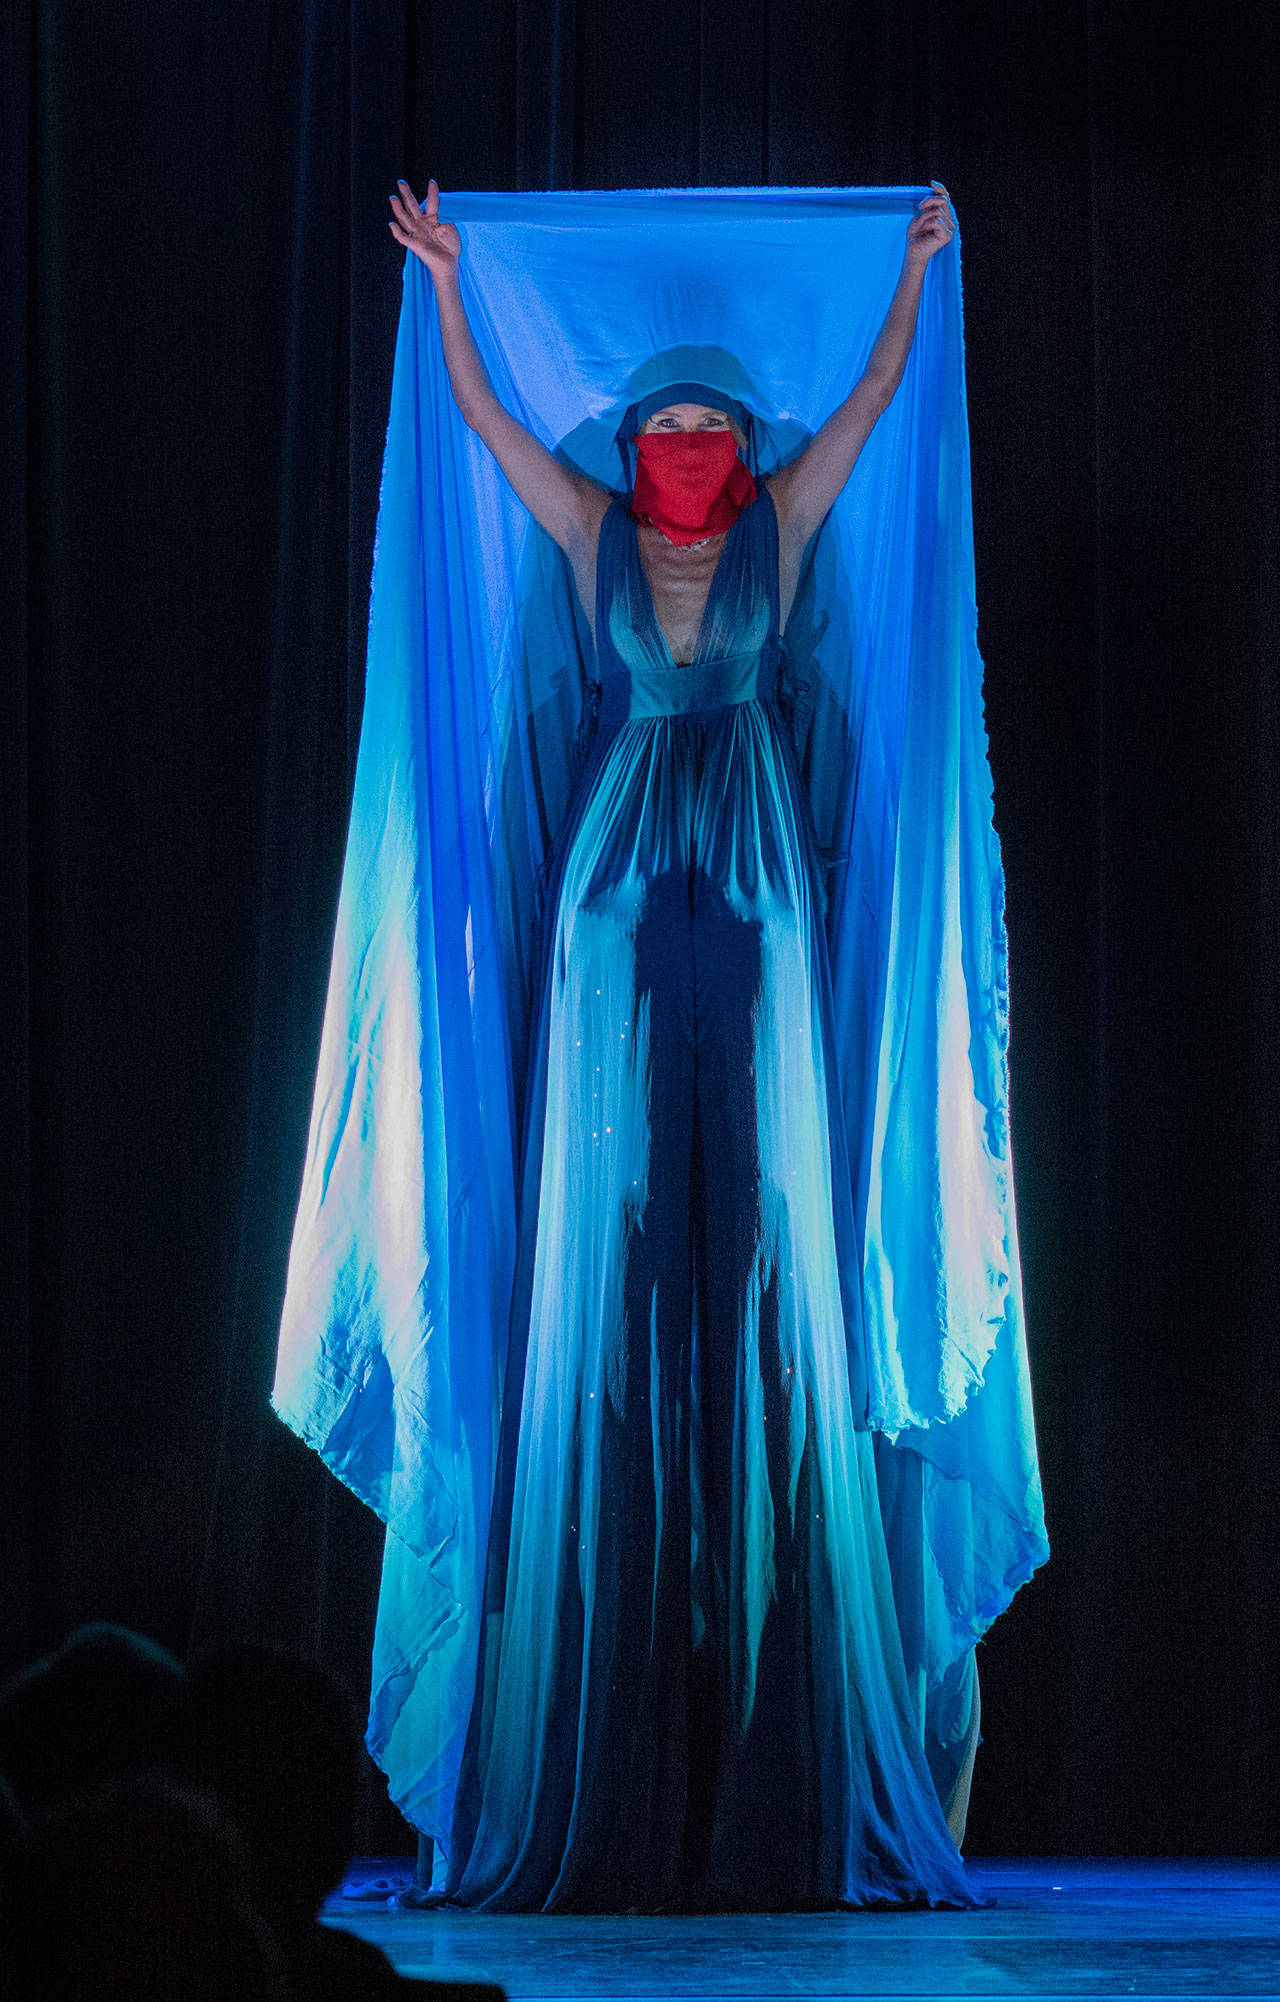 Janet McAlpin is the stilted, lavishly costumed host of Burlesco Notturno (Michelle Bates Photo).